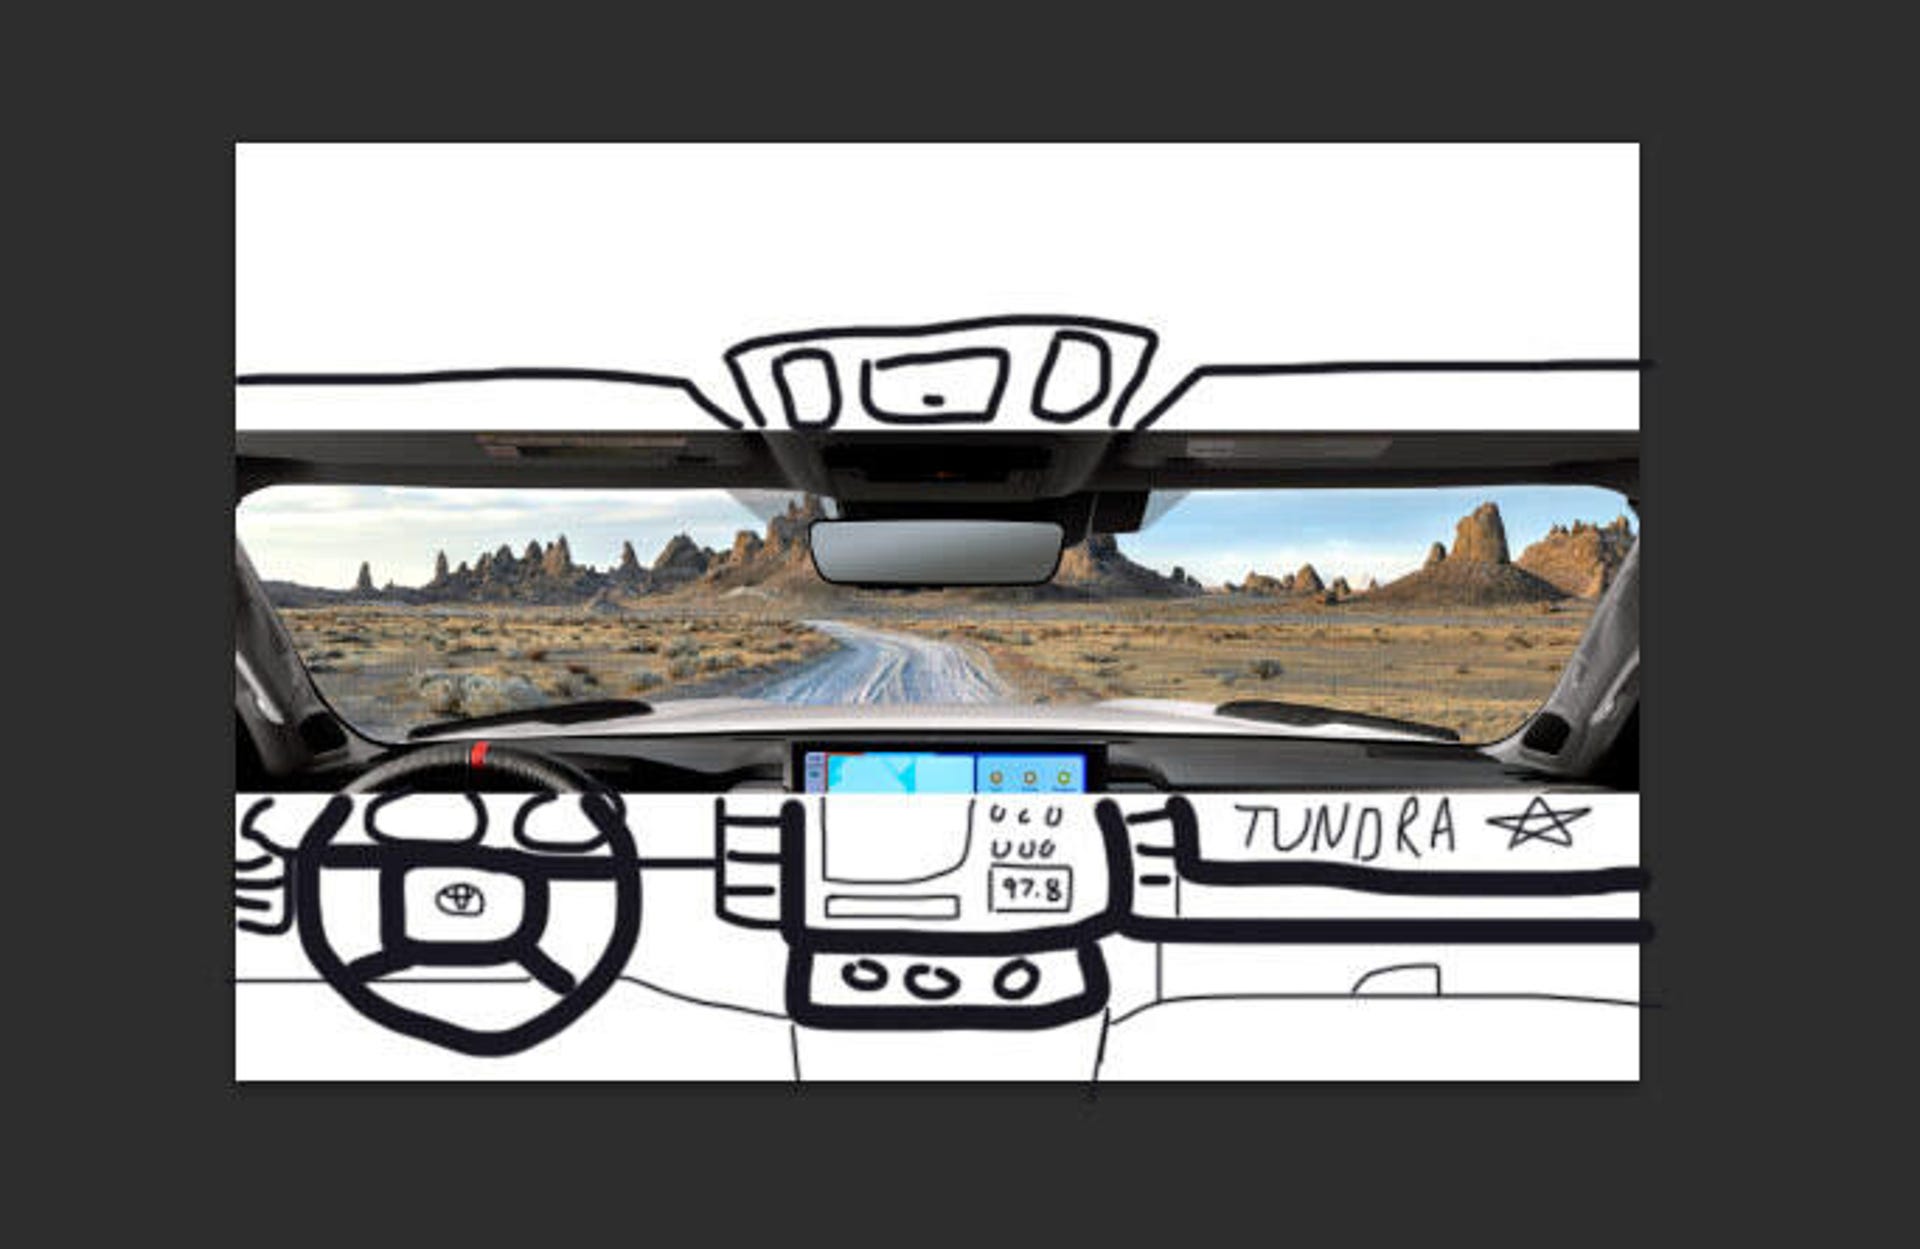 2022 Toyota Tundra interior rendering joke